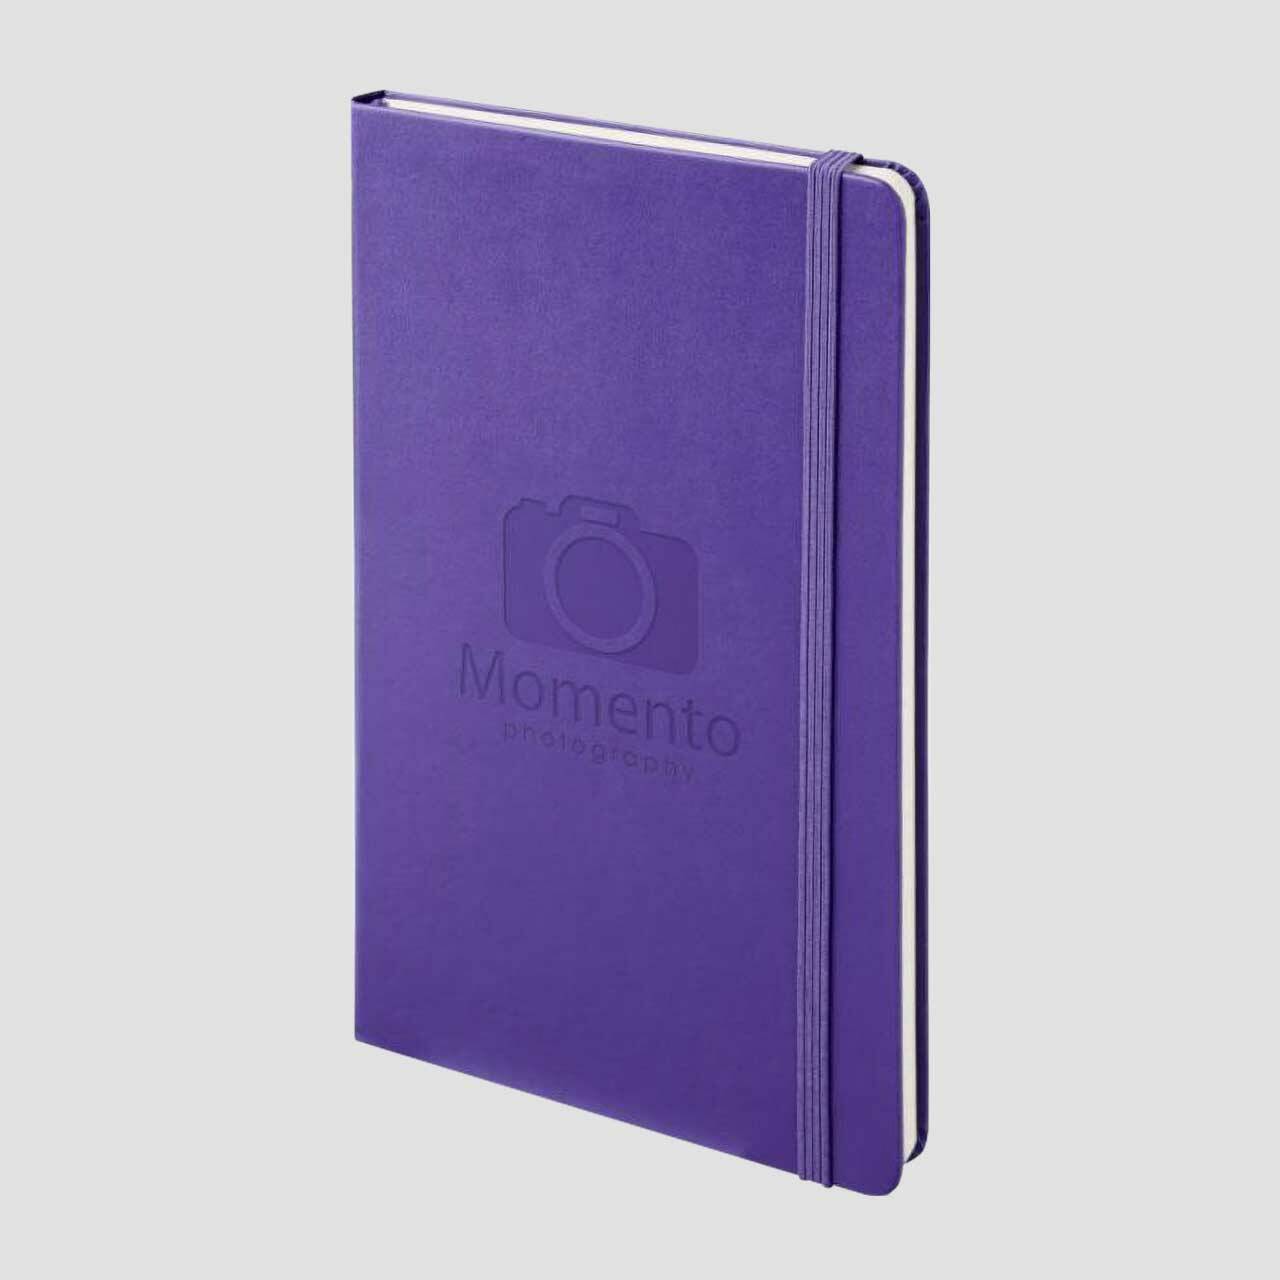 Moleskine notitieboek hard cover, paars